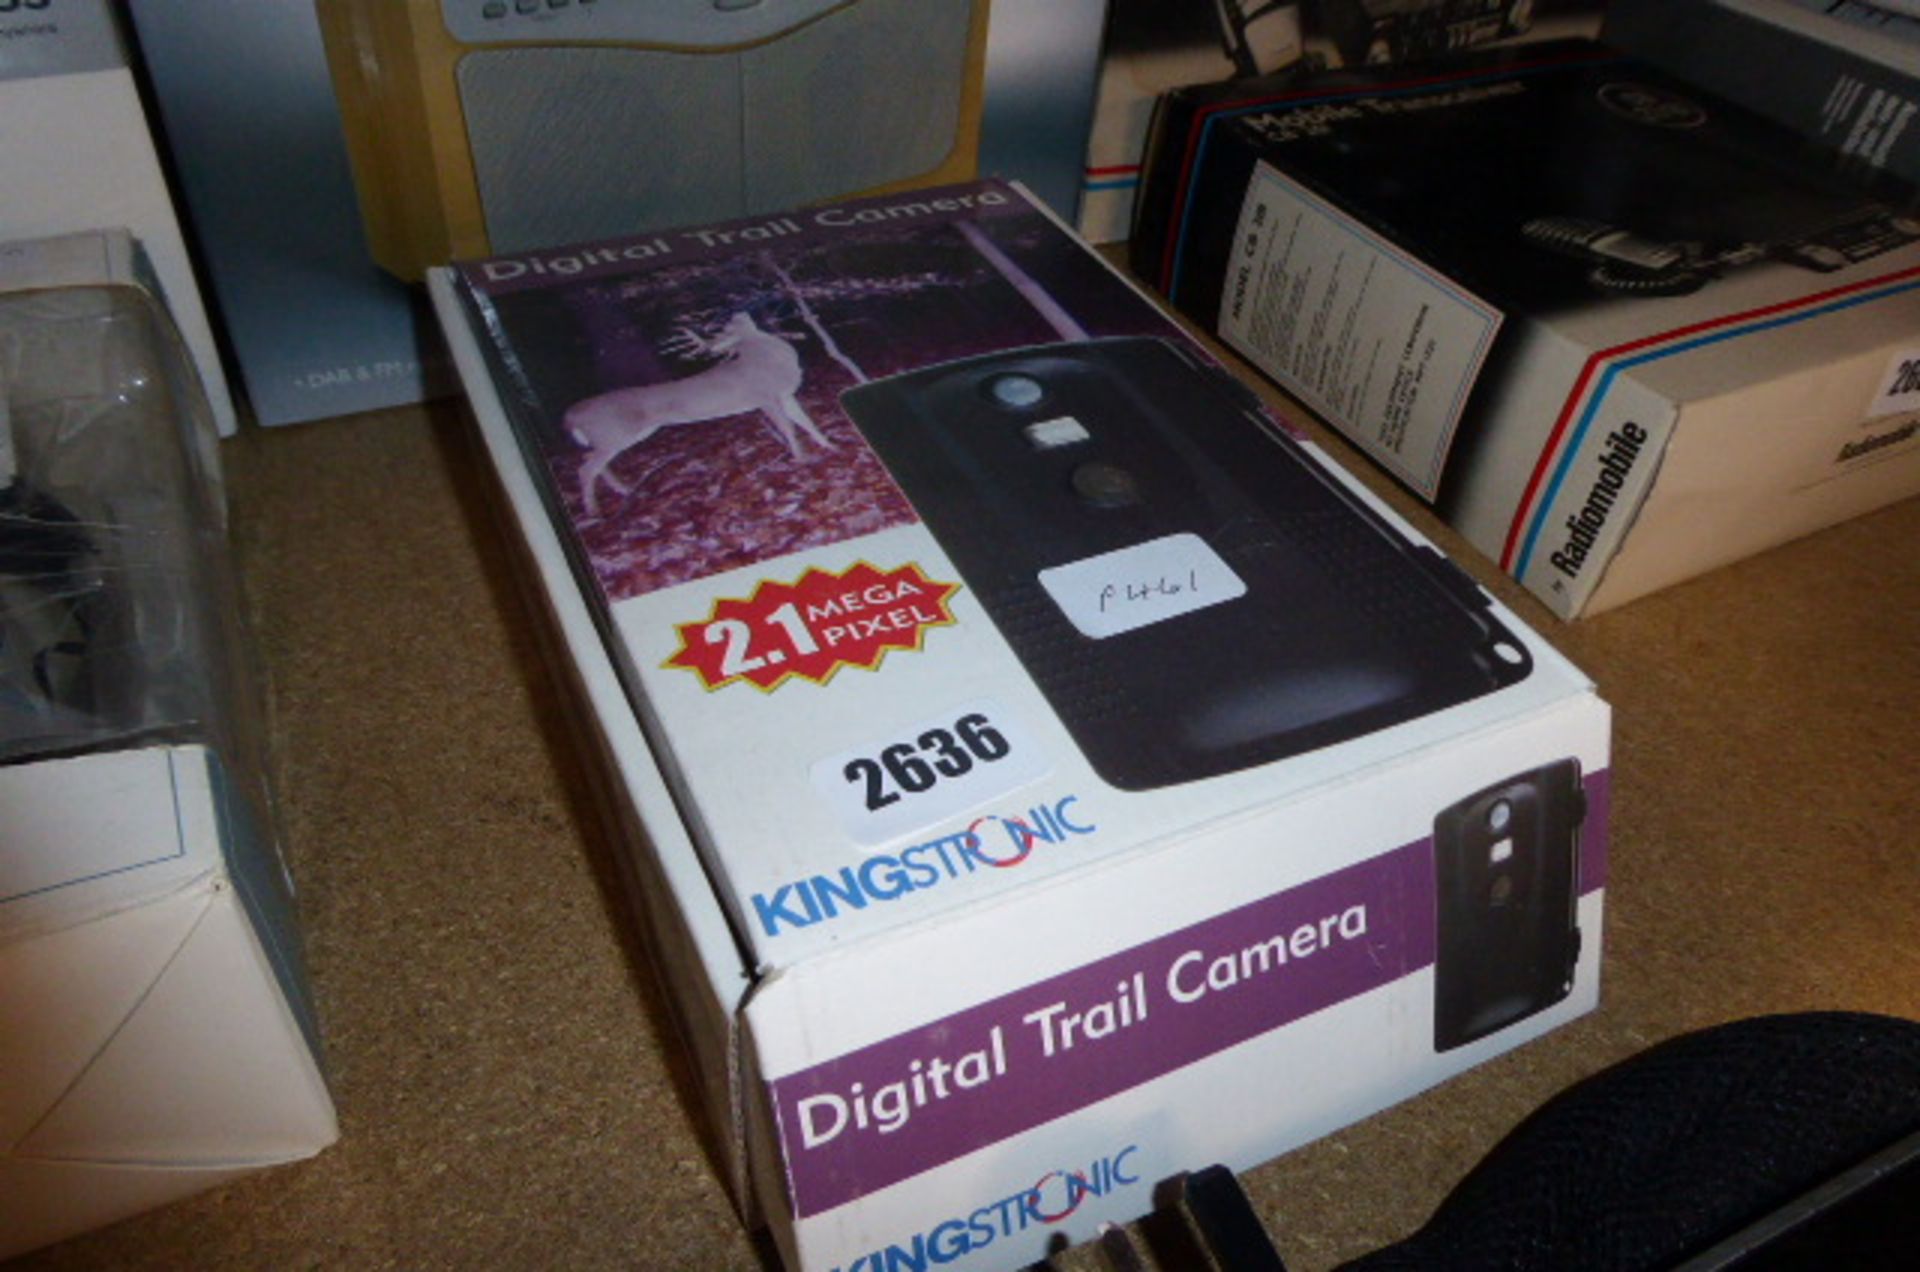 Kings Tronic digital trail camera in box